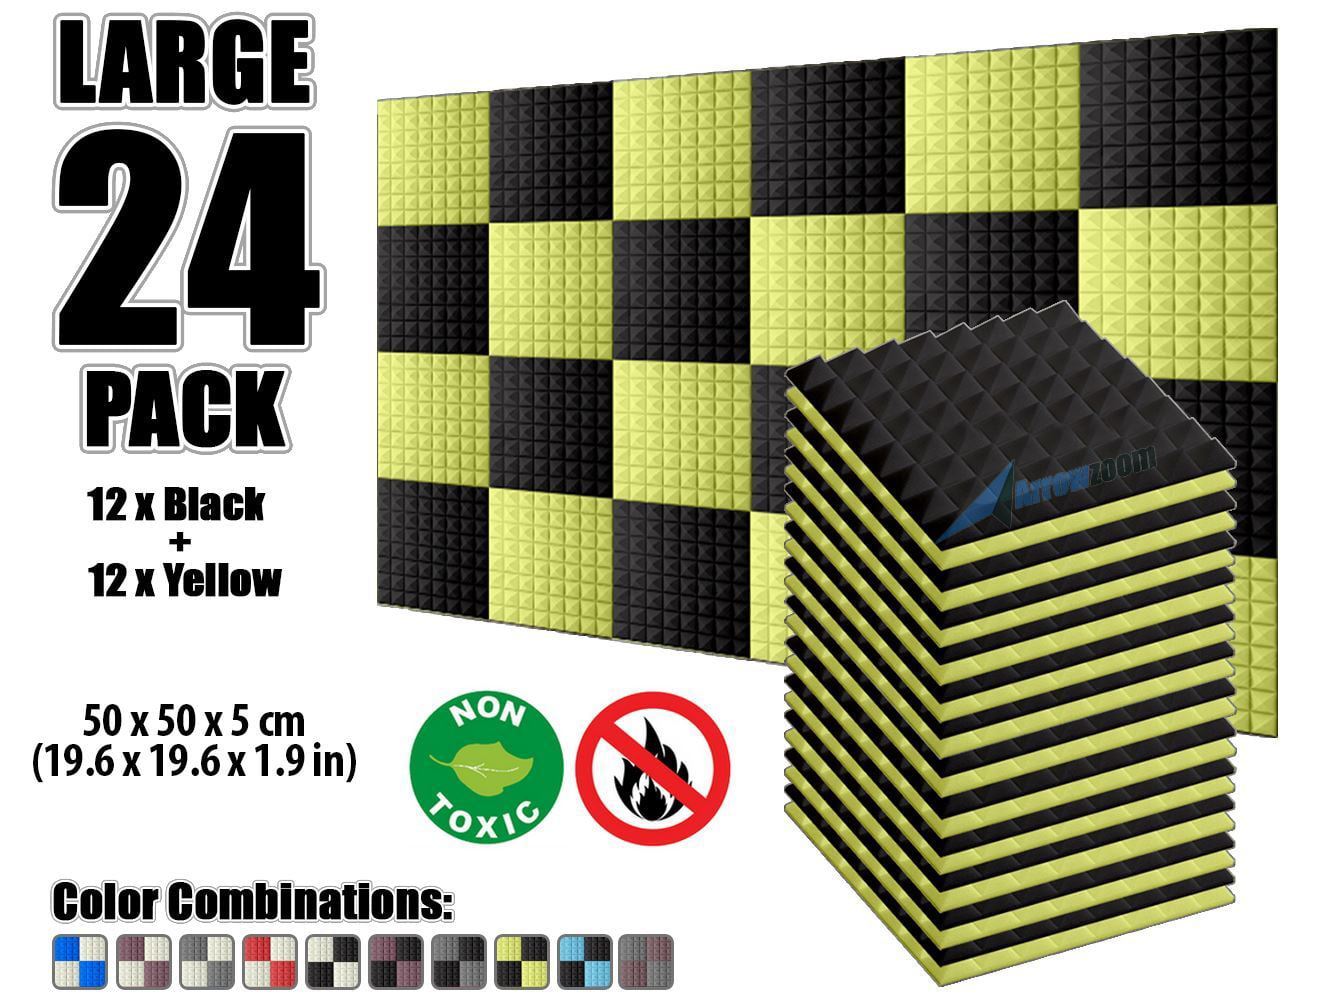 96 Packs Acoustic Wedge Studio Soundproofing Foam Wall Tiles 12" X 12" X 1" M0 